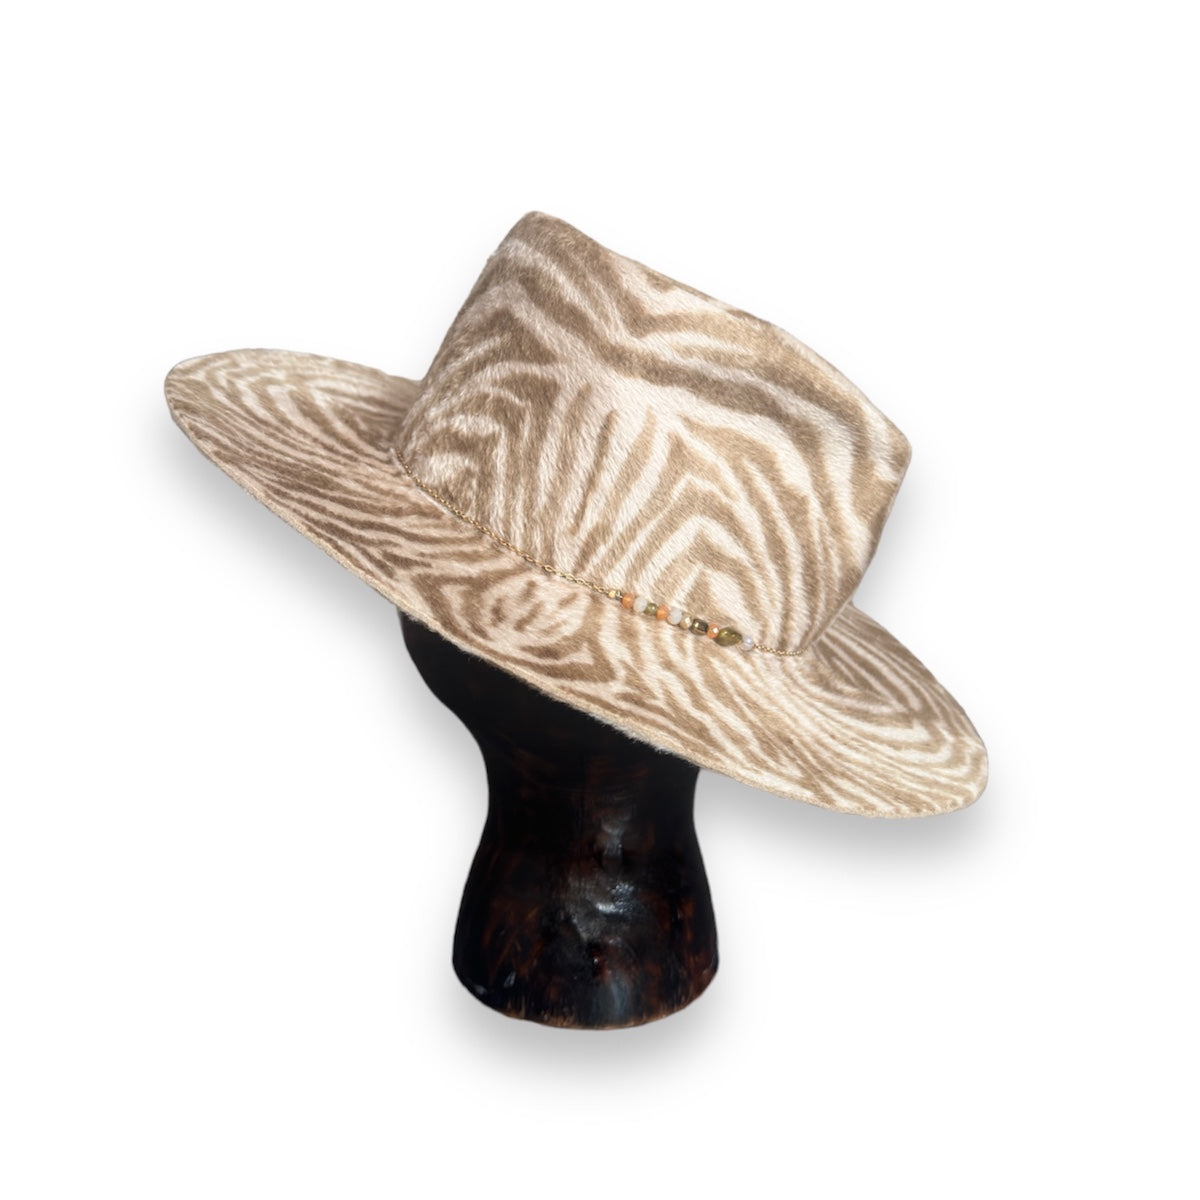 The different PURE ZEBRA hat